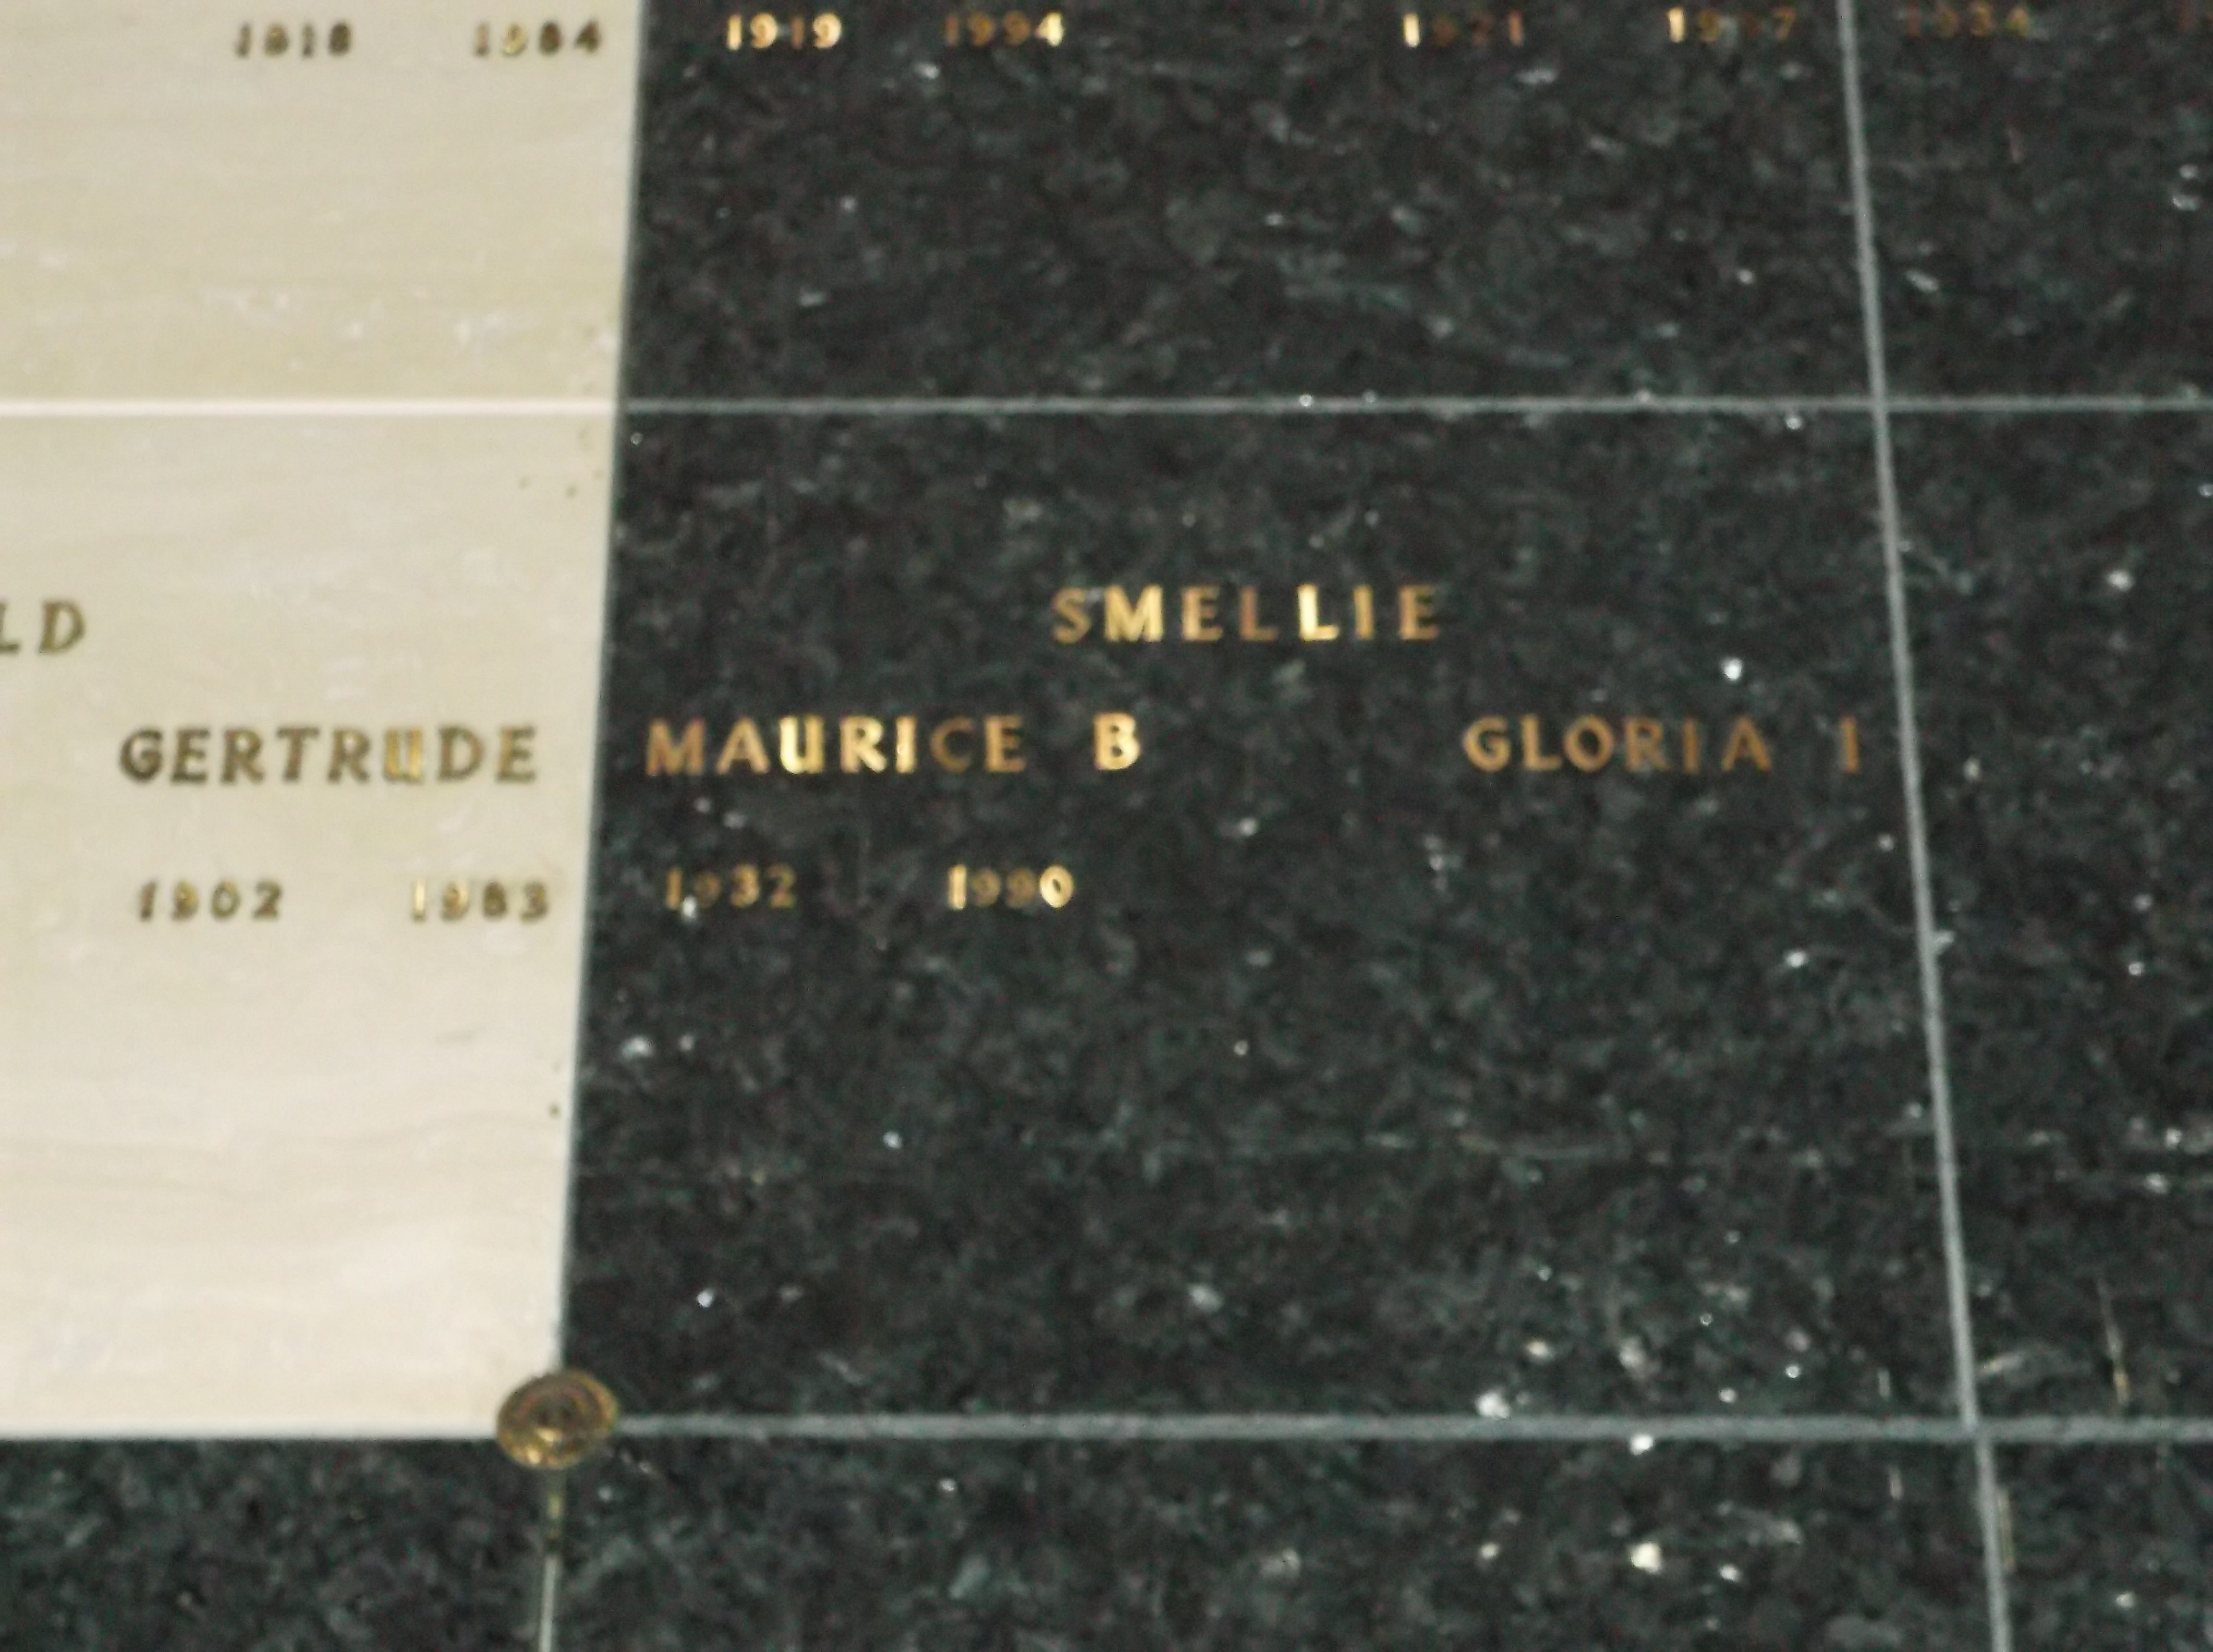 Maurice B Smellie